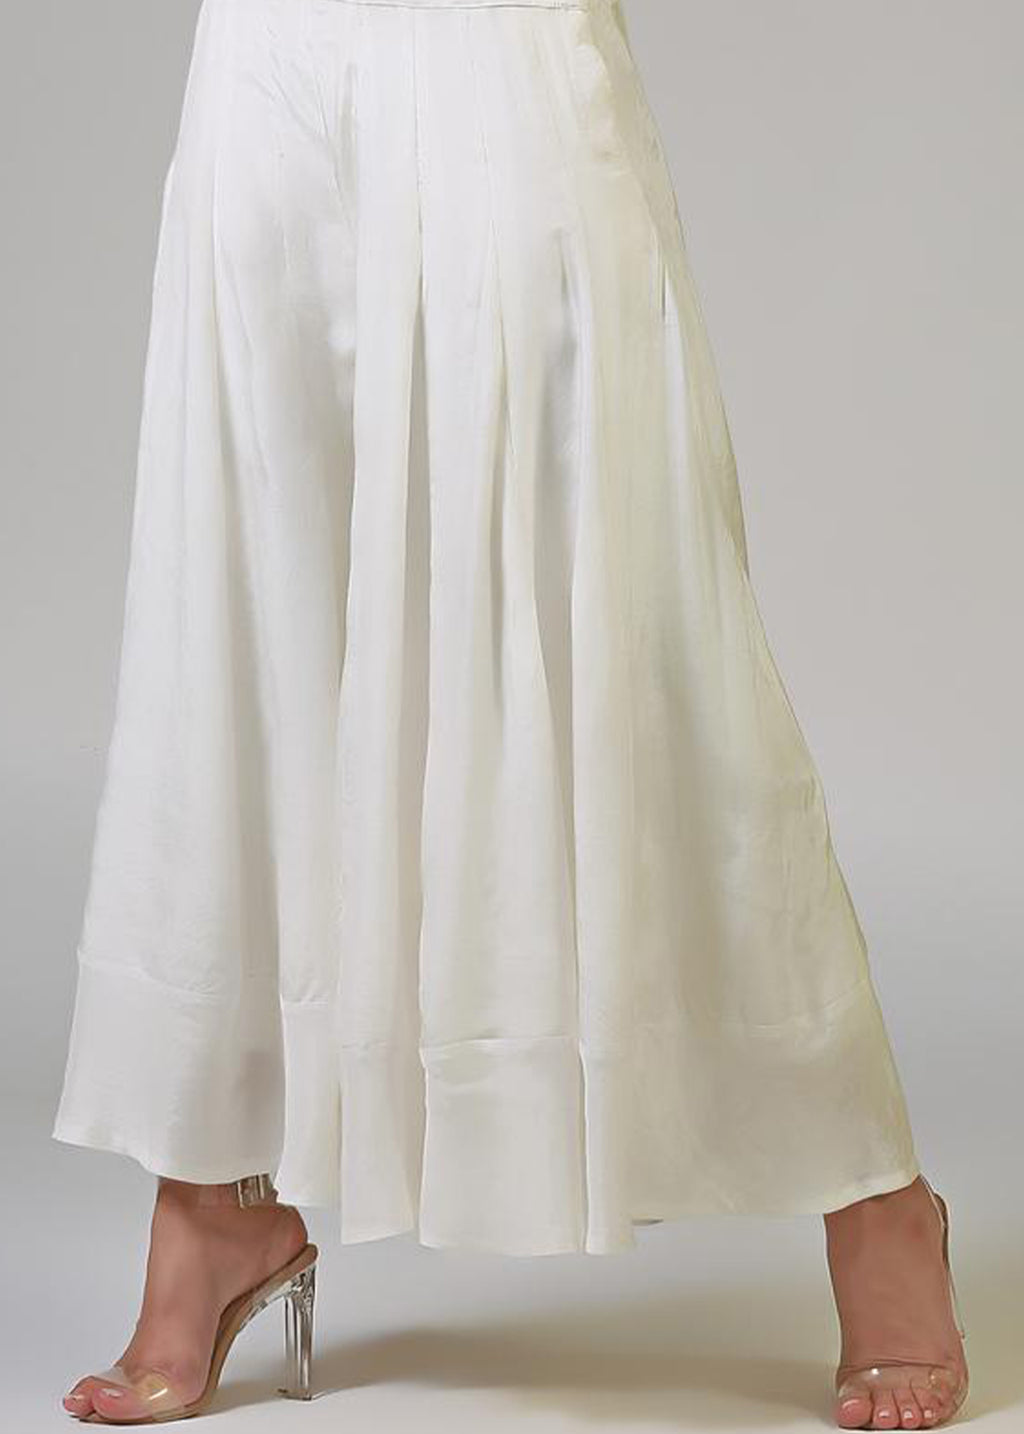 Plain White Mesh Fabric at Rs 23/kilogram in Amritsar